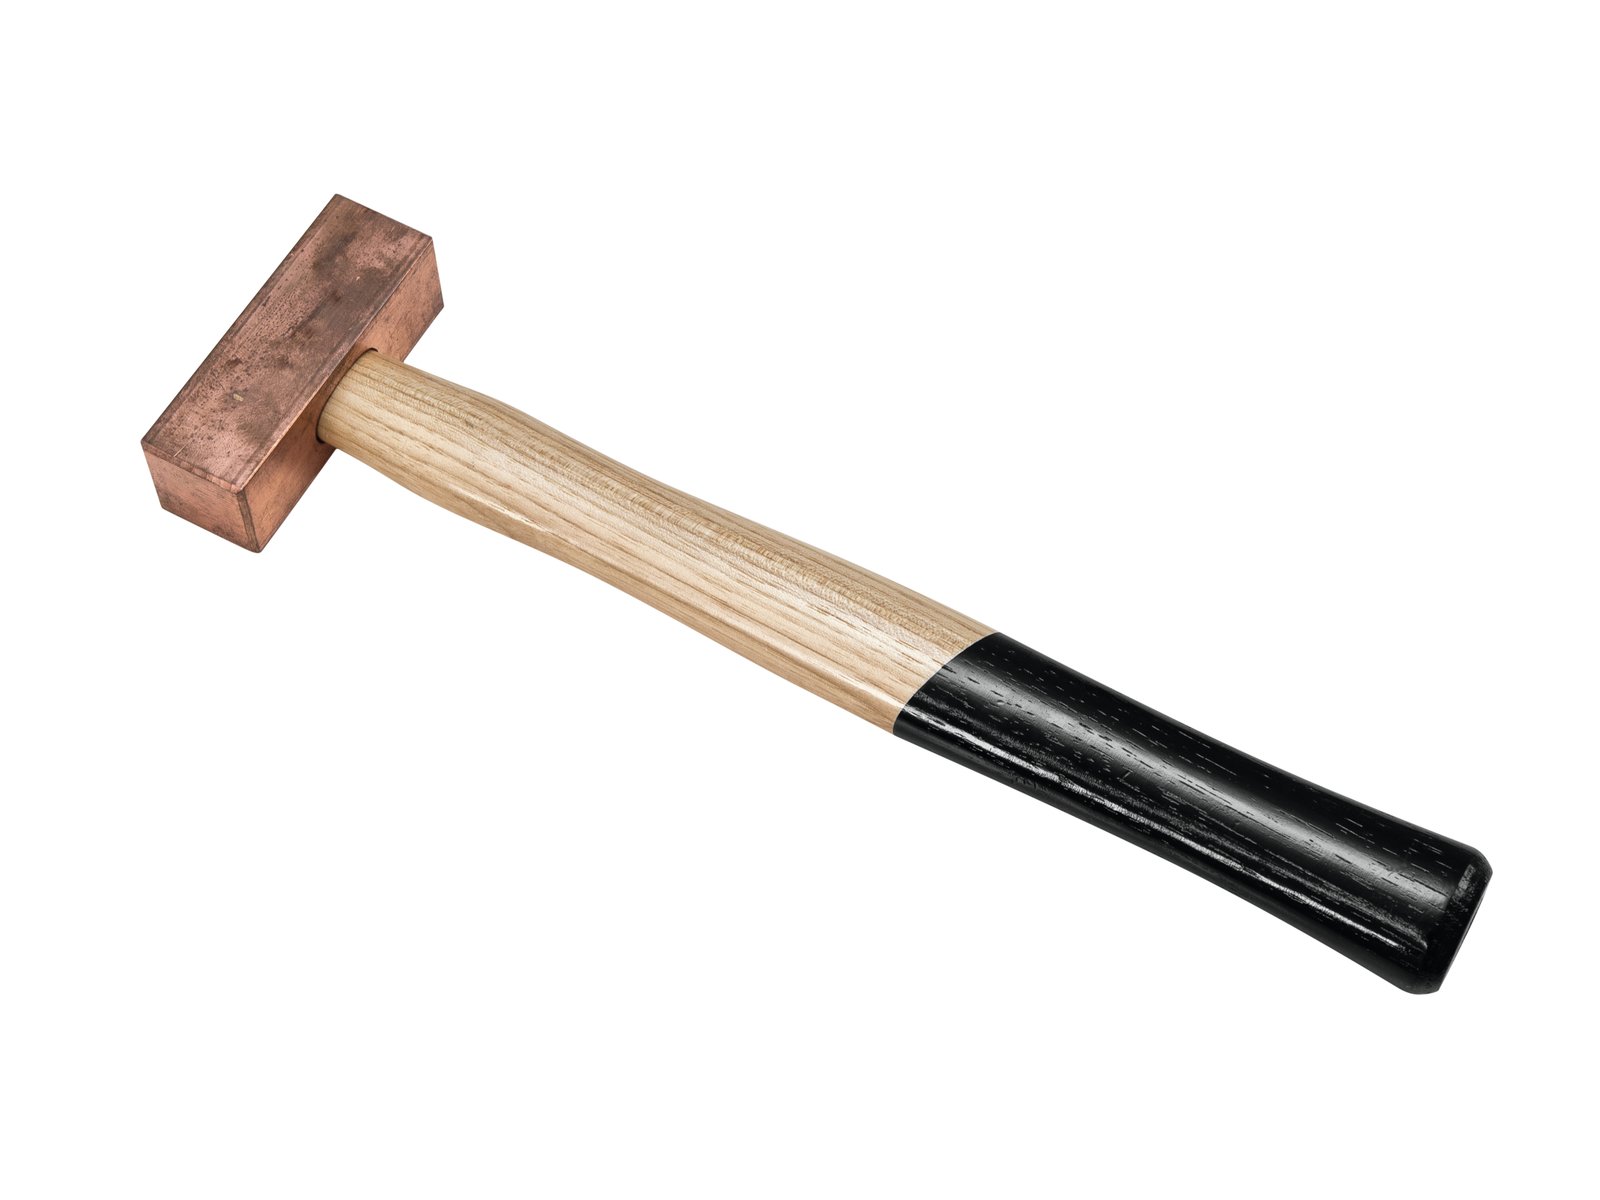 ACCESSORY Copper hammer 500g shaft length 310mm